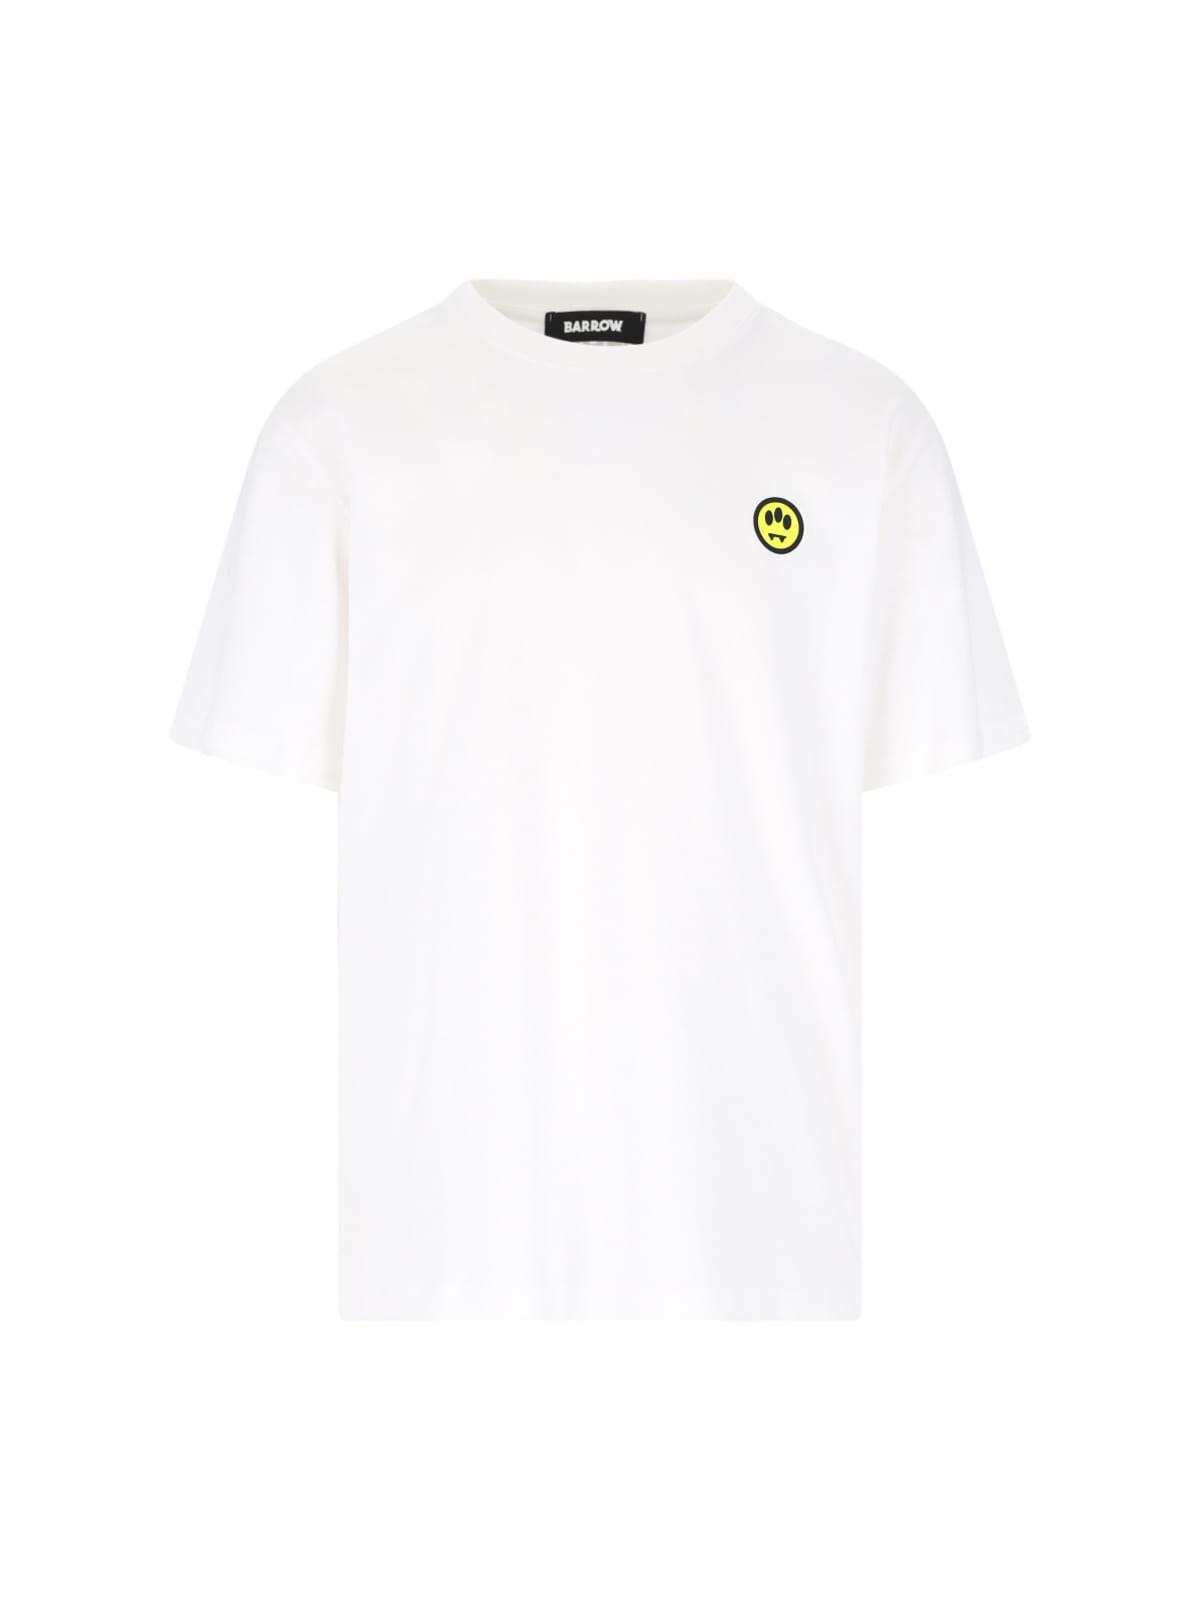 Barrow T-shirt in White | Lyst